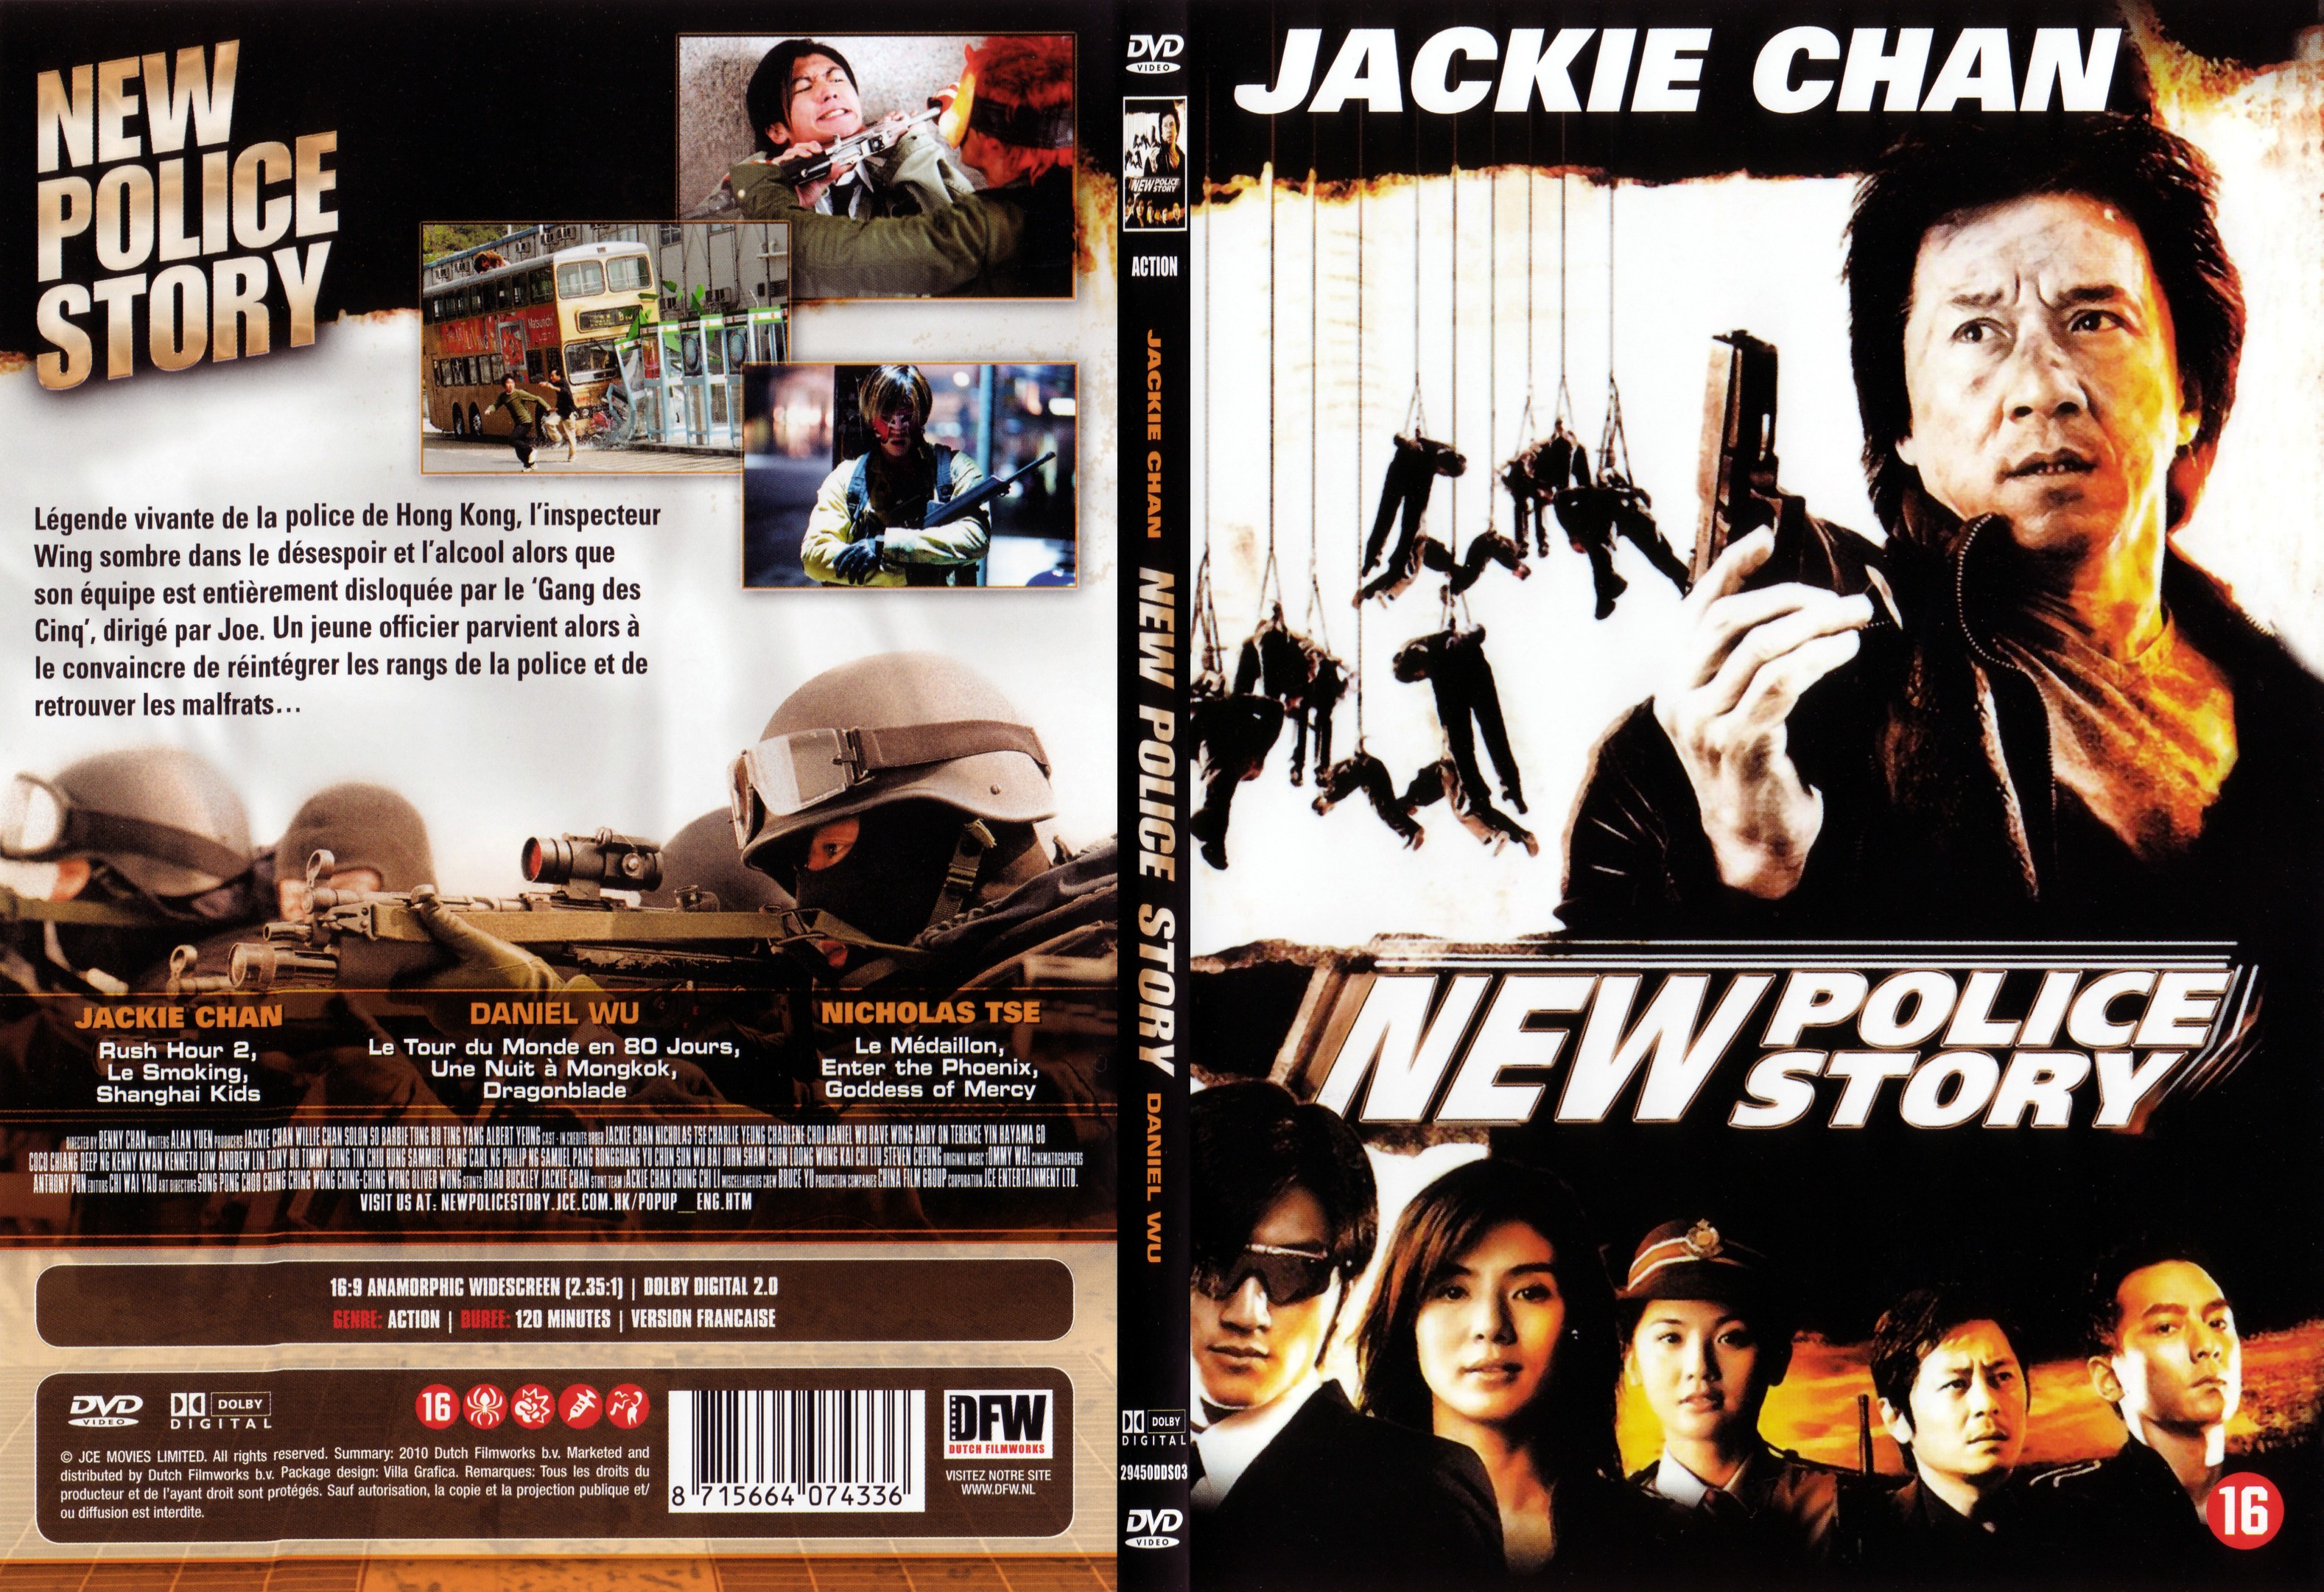 Jaquette DVD New police story - SLIM v2